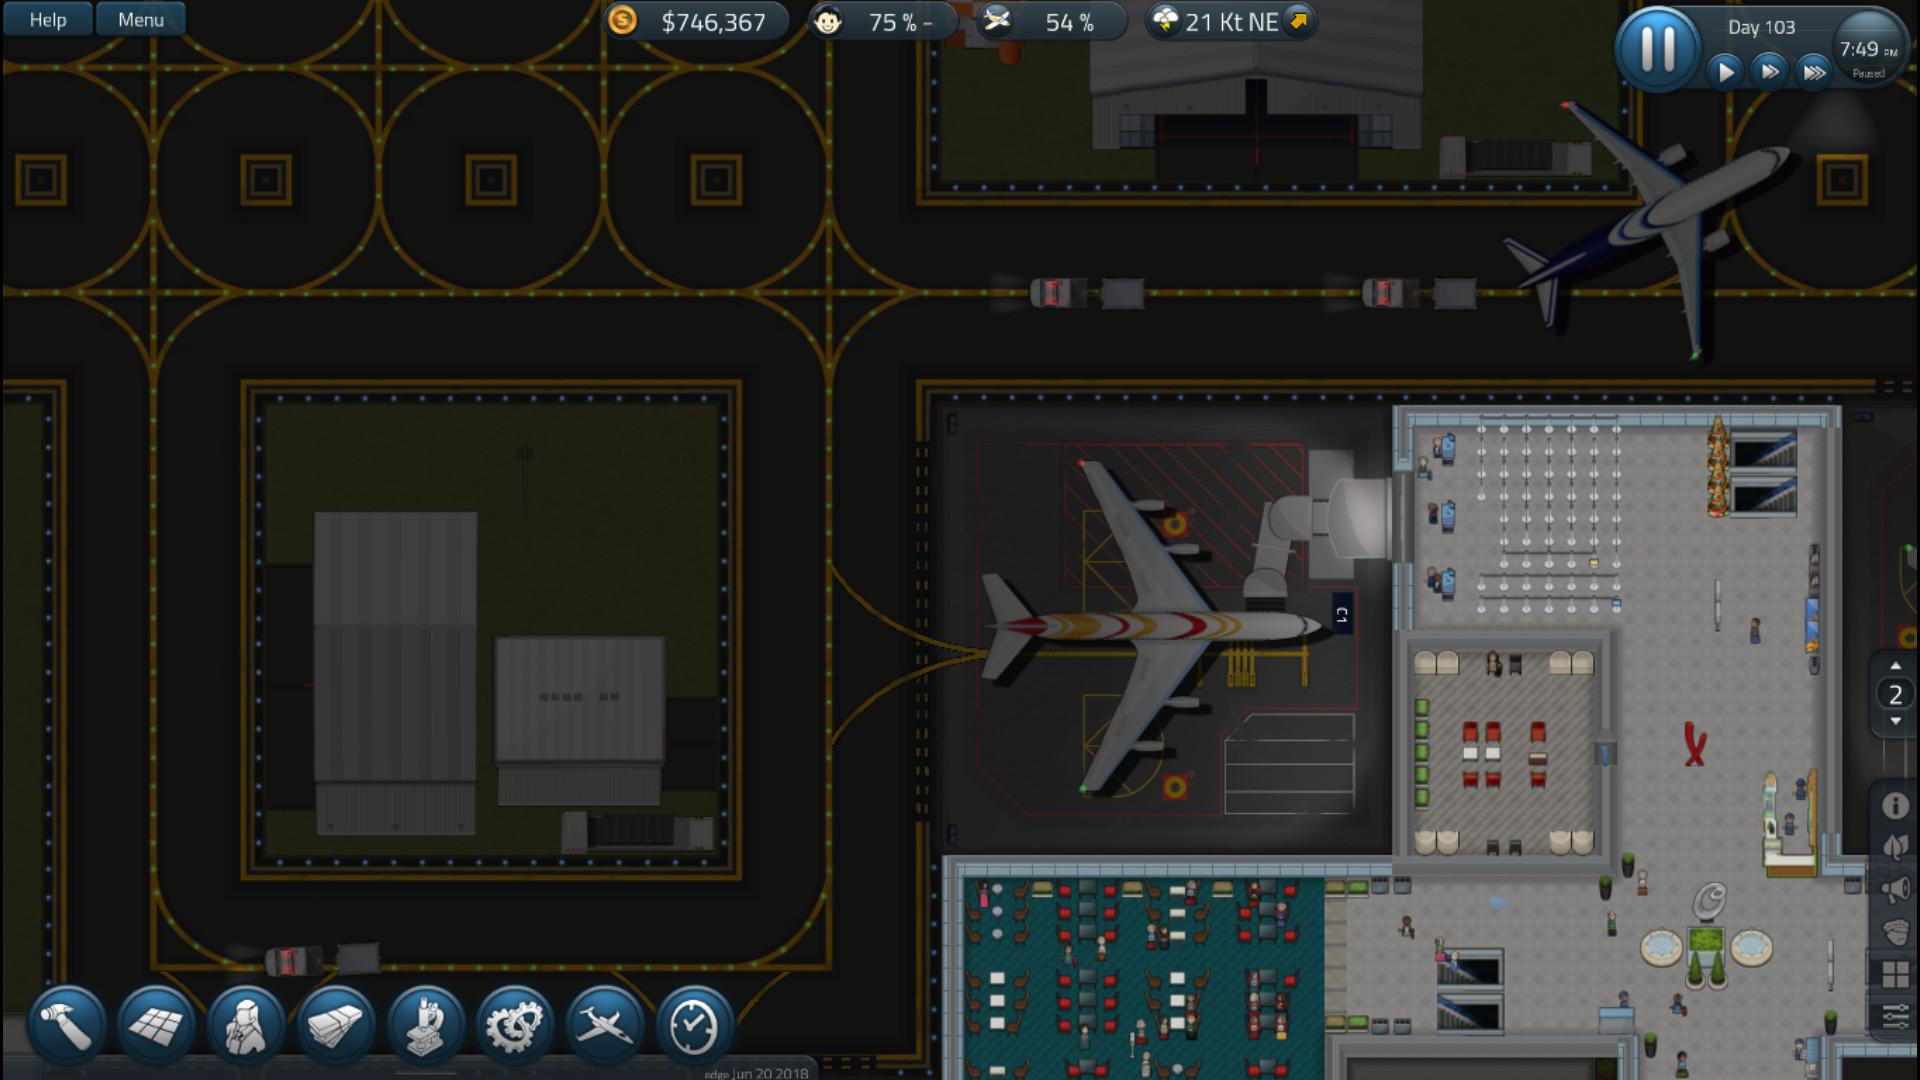 Screenshot №13 from game SimAirport